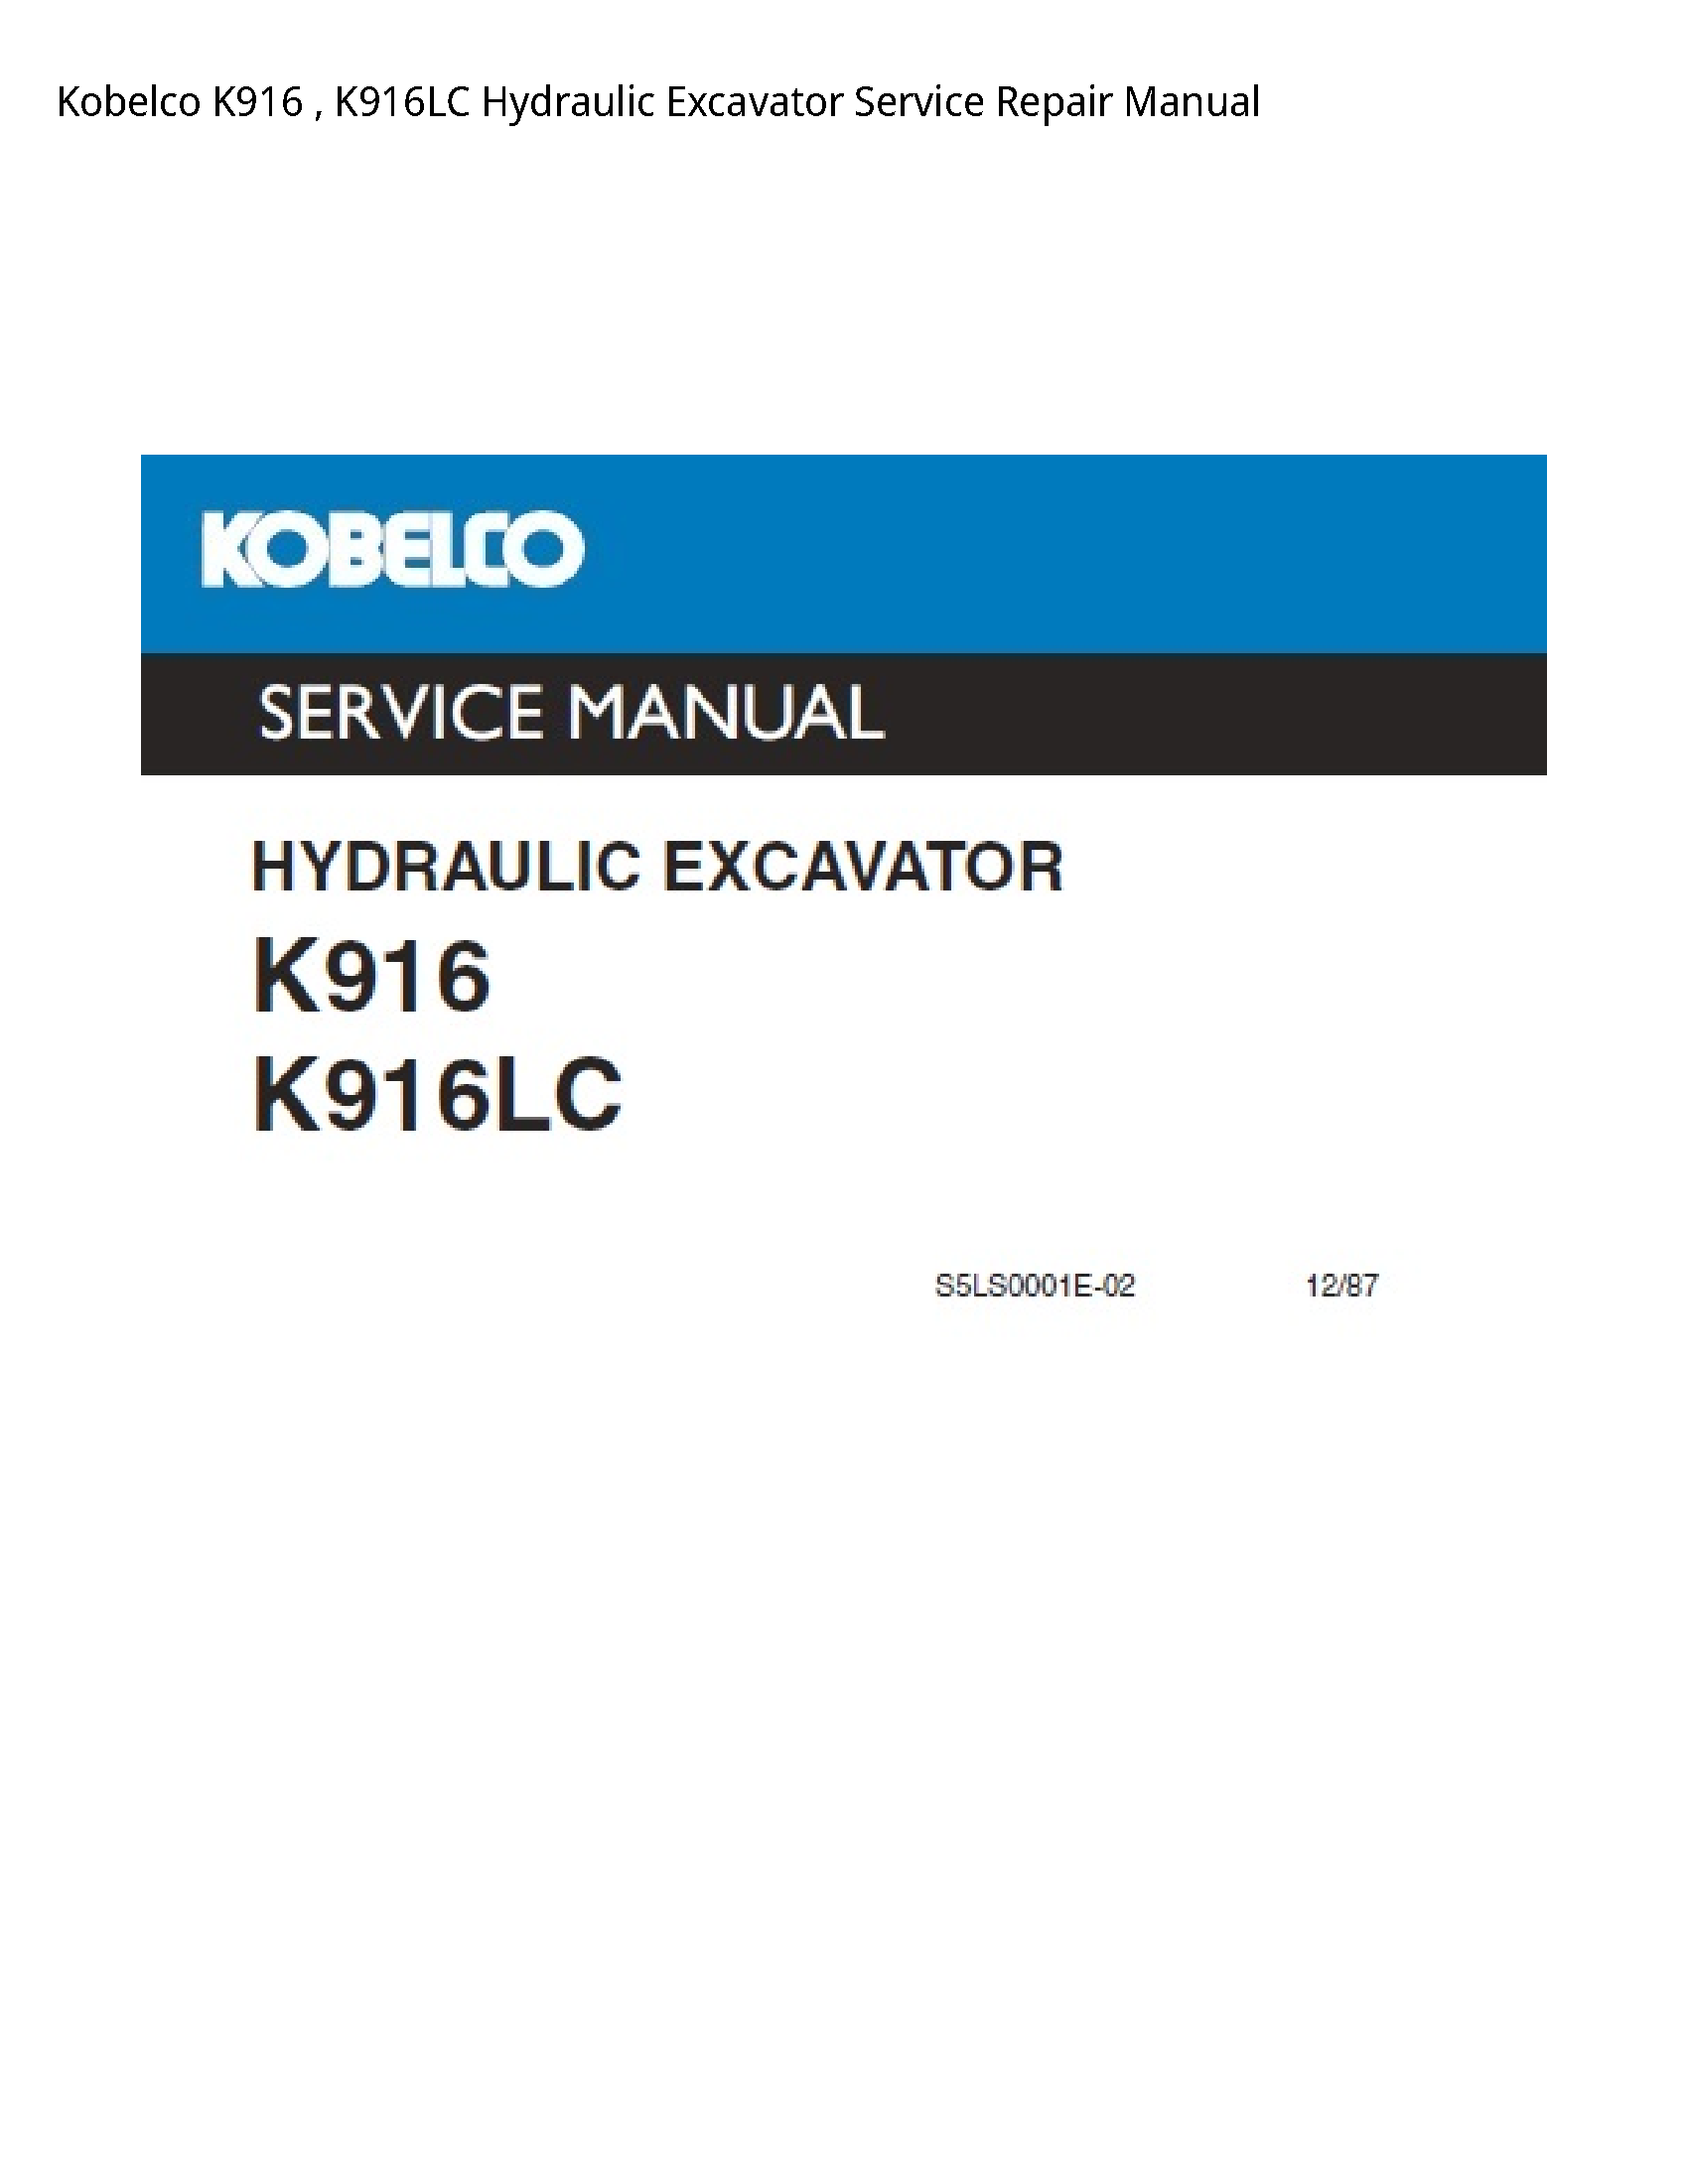 Kobelco K916 Hydraulic Excavator manual